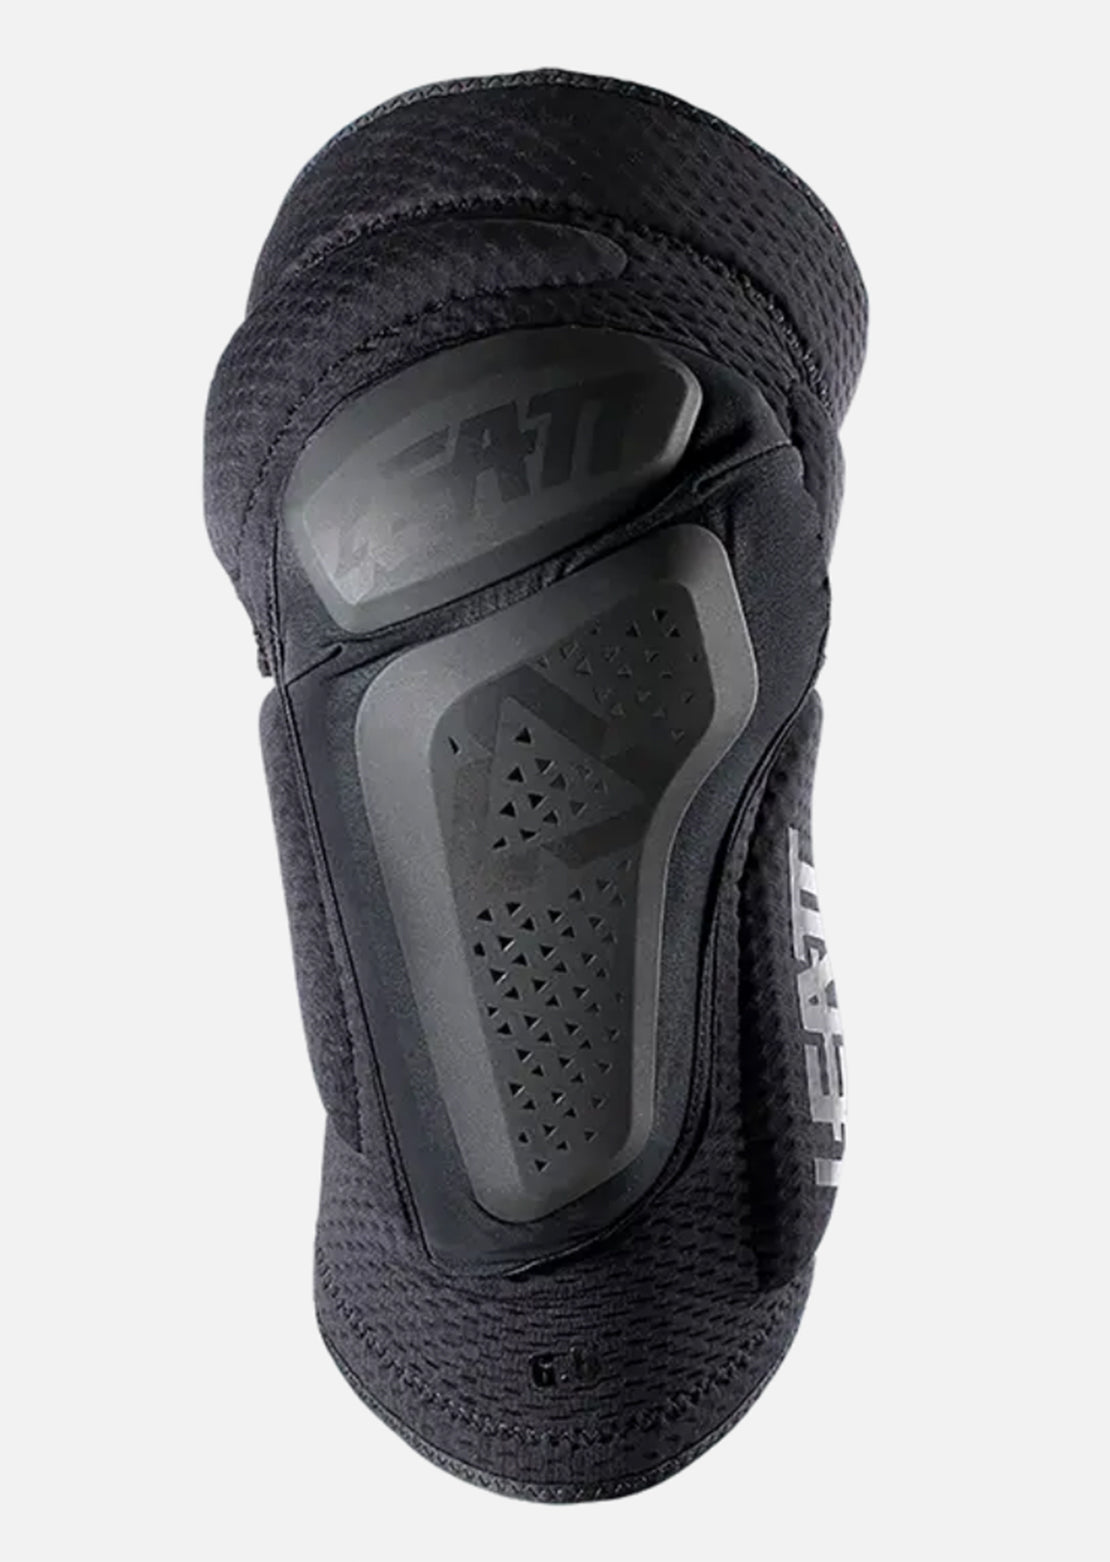 Leatt 3DF 6.0 Knee Guards Black